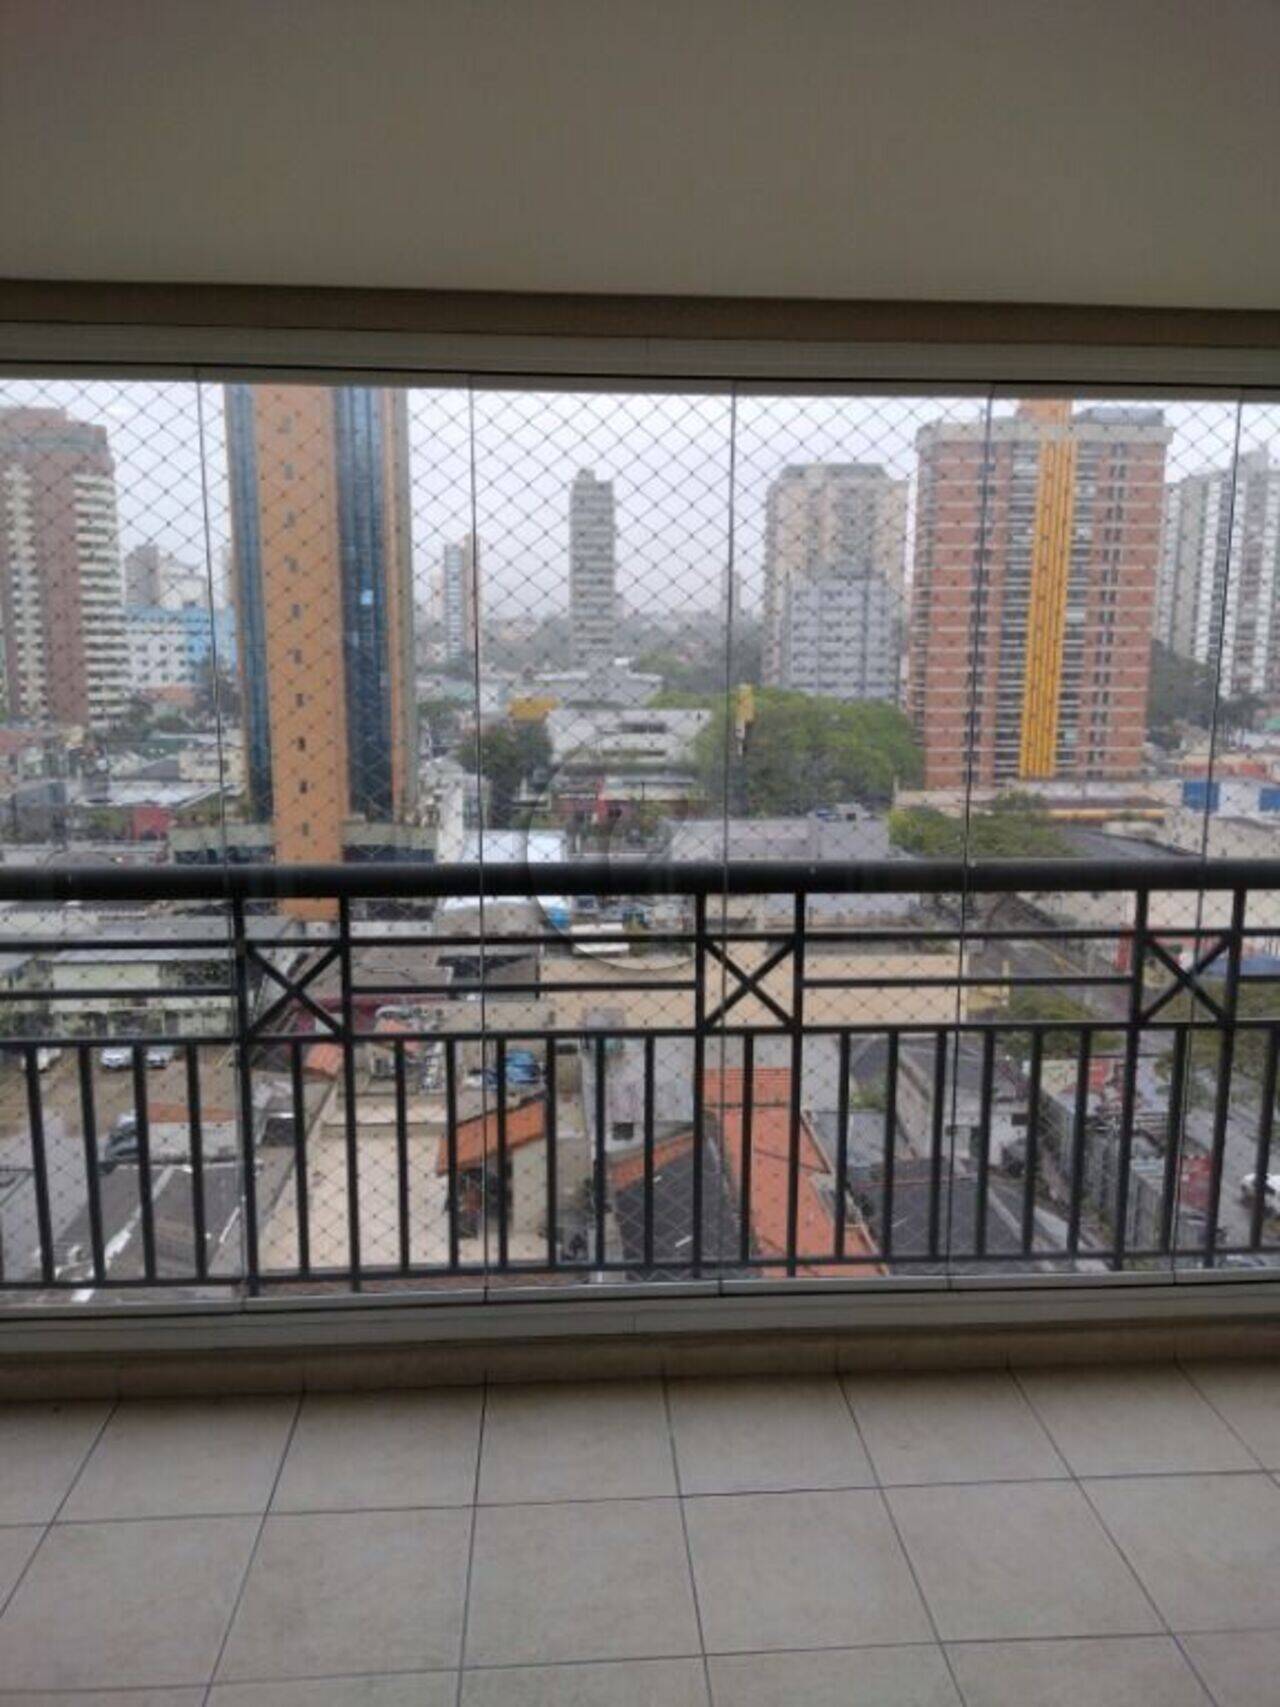 Apartamento Jardim, Santo André - SP